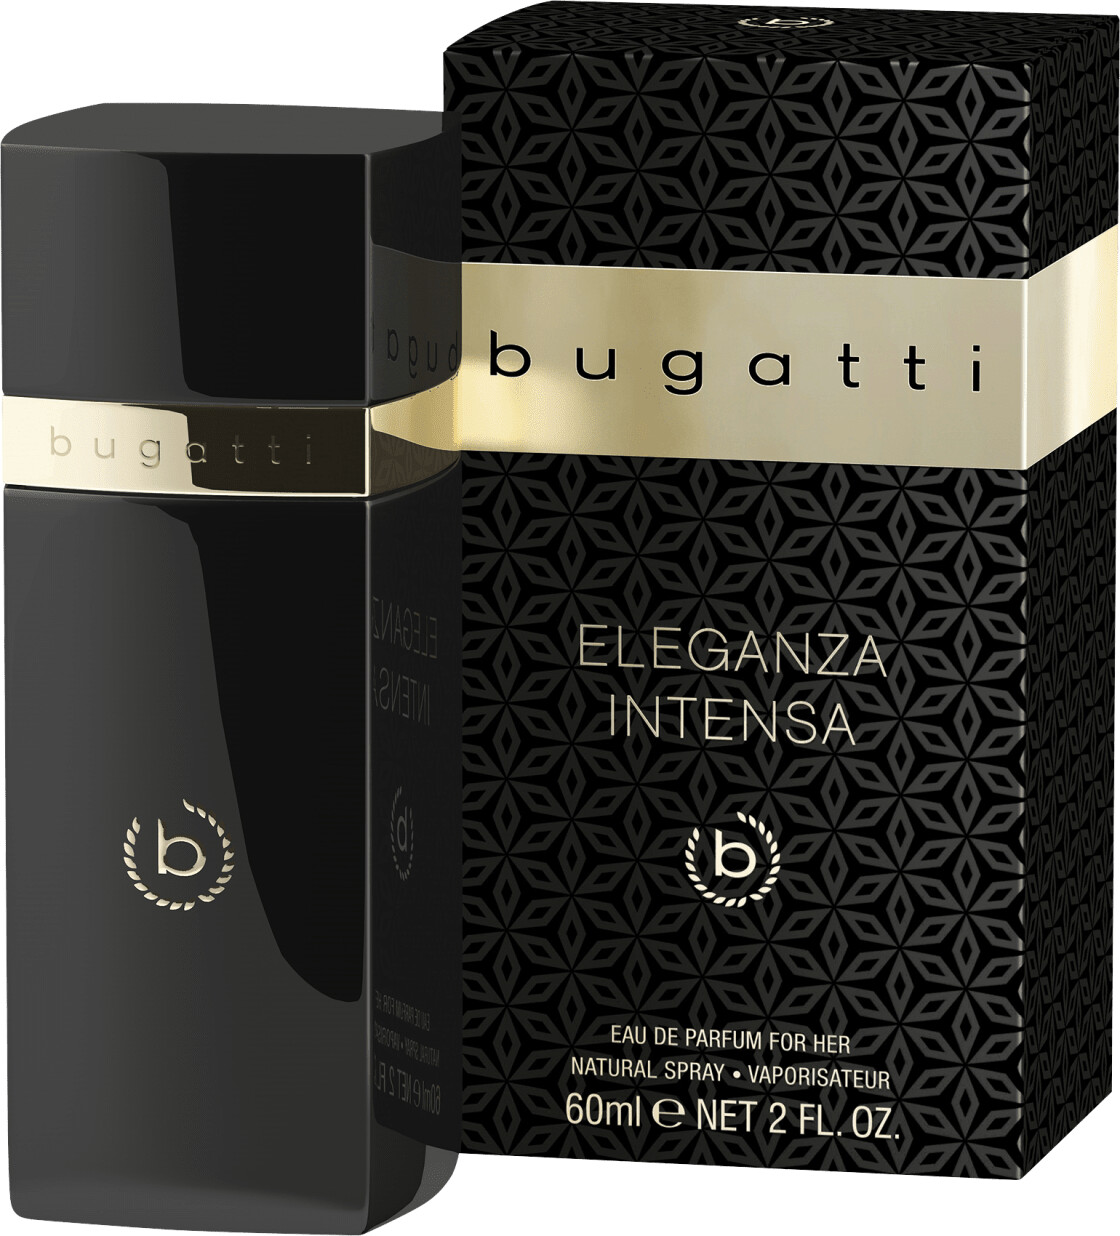 Bugatti Eleganza Intensa Eau de bei Parfum | 17,95 Preisvergleich € (60ml) ab